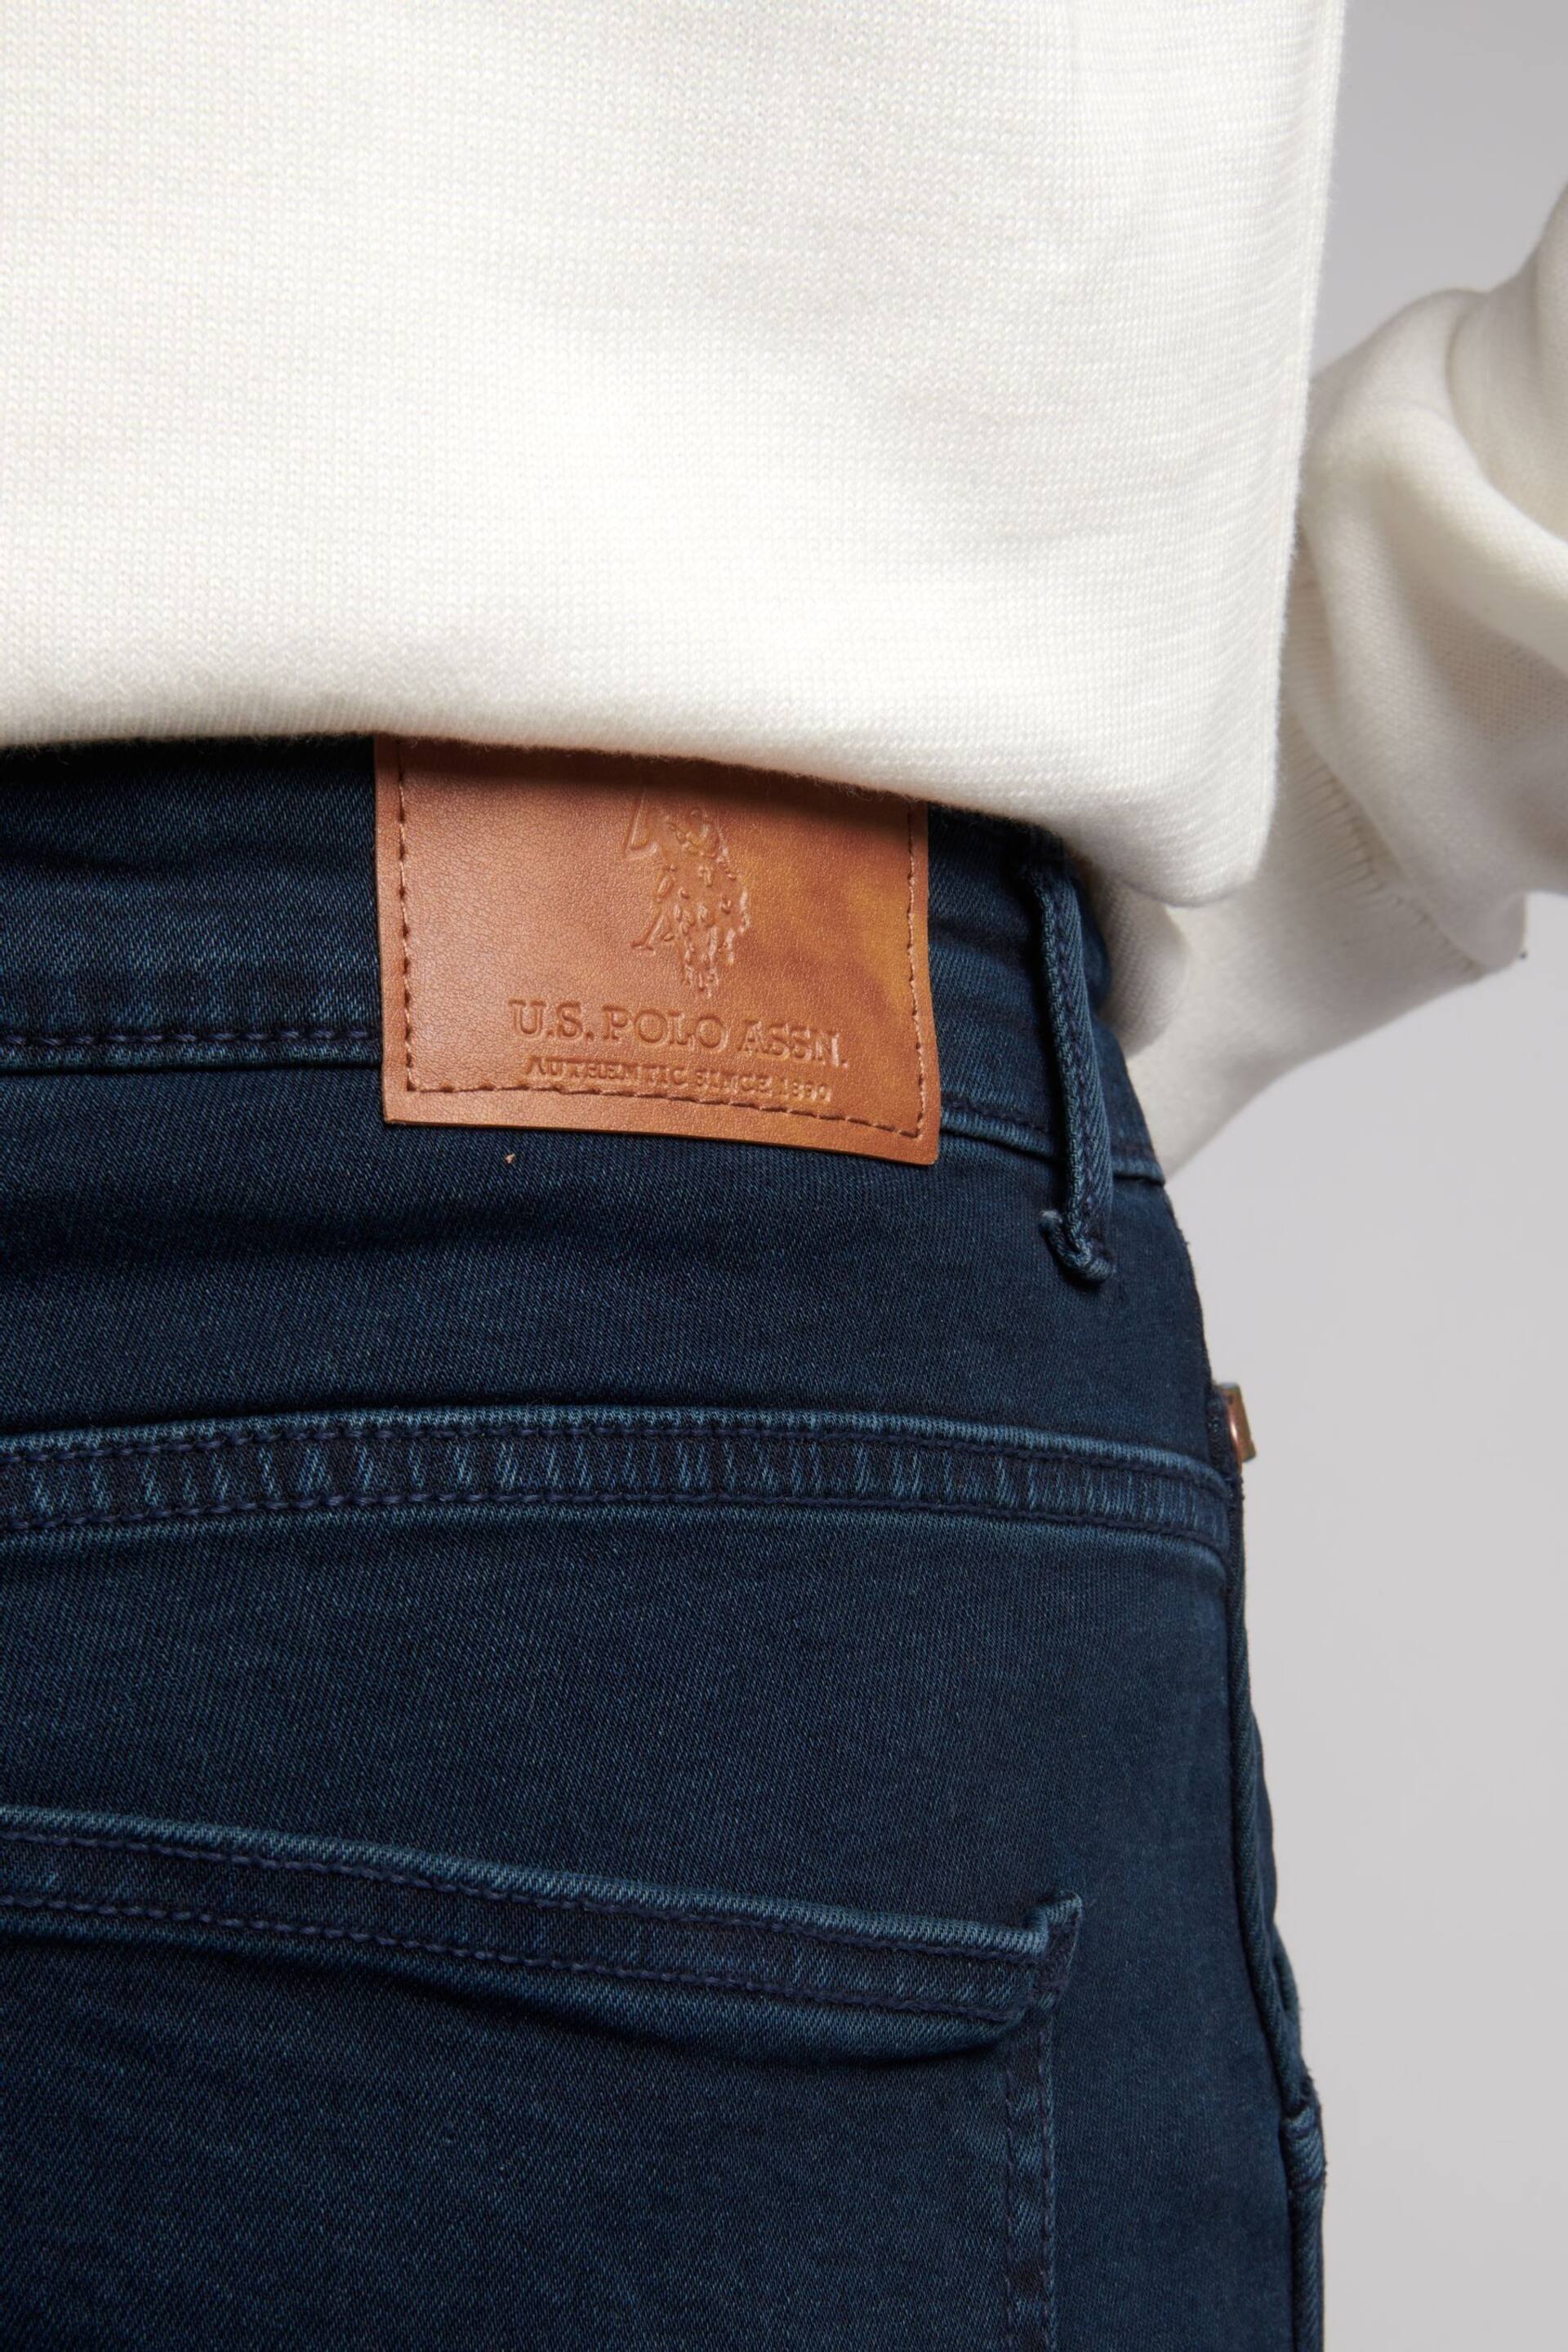 U.S. Polo Assn. Mens Blue Five Pocket Denim Loose Jeans - Image 4 of 4